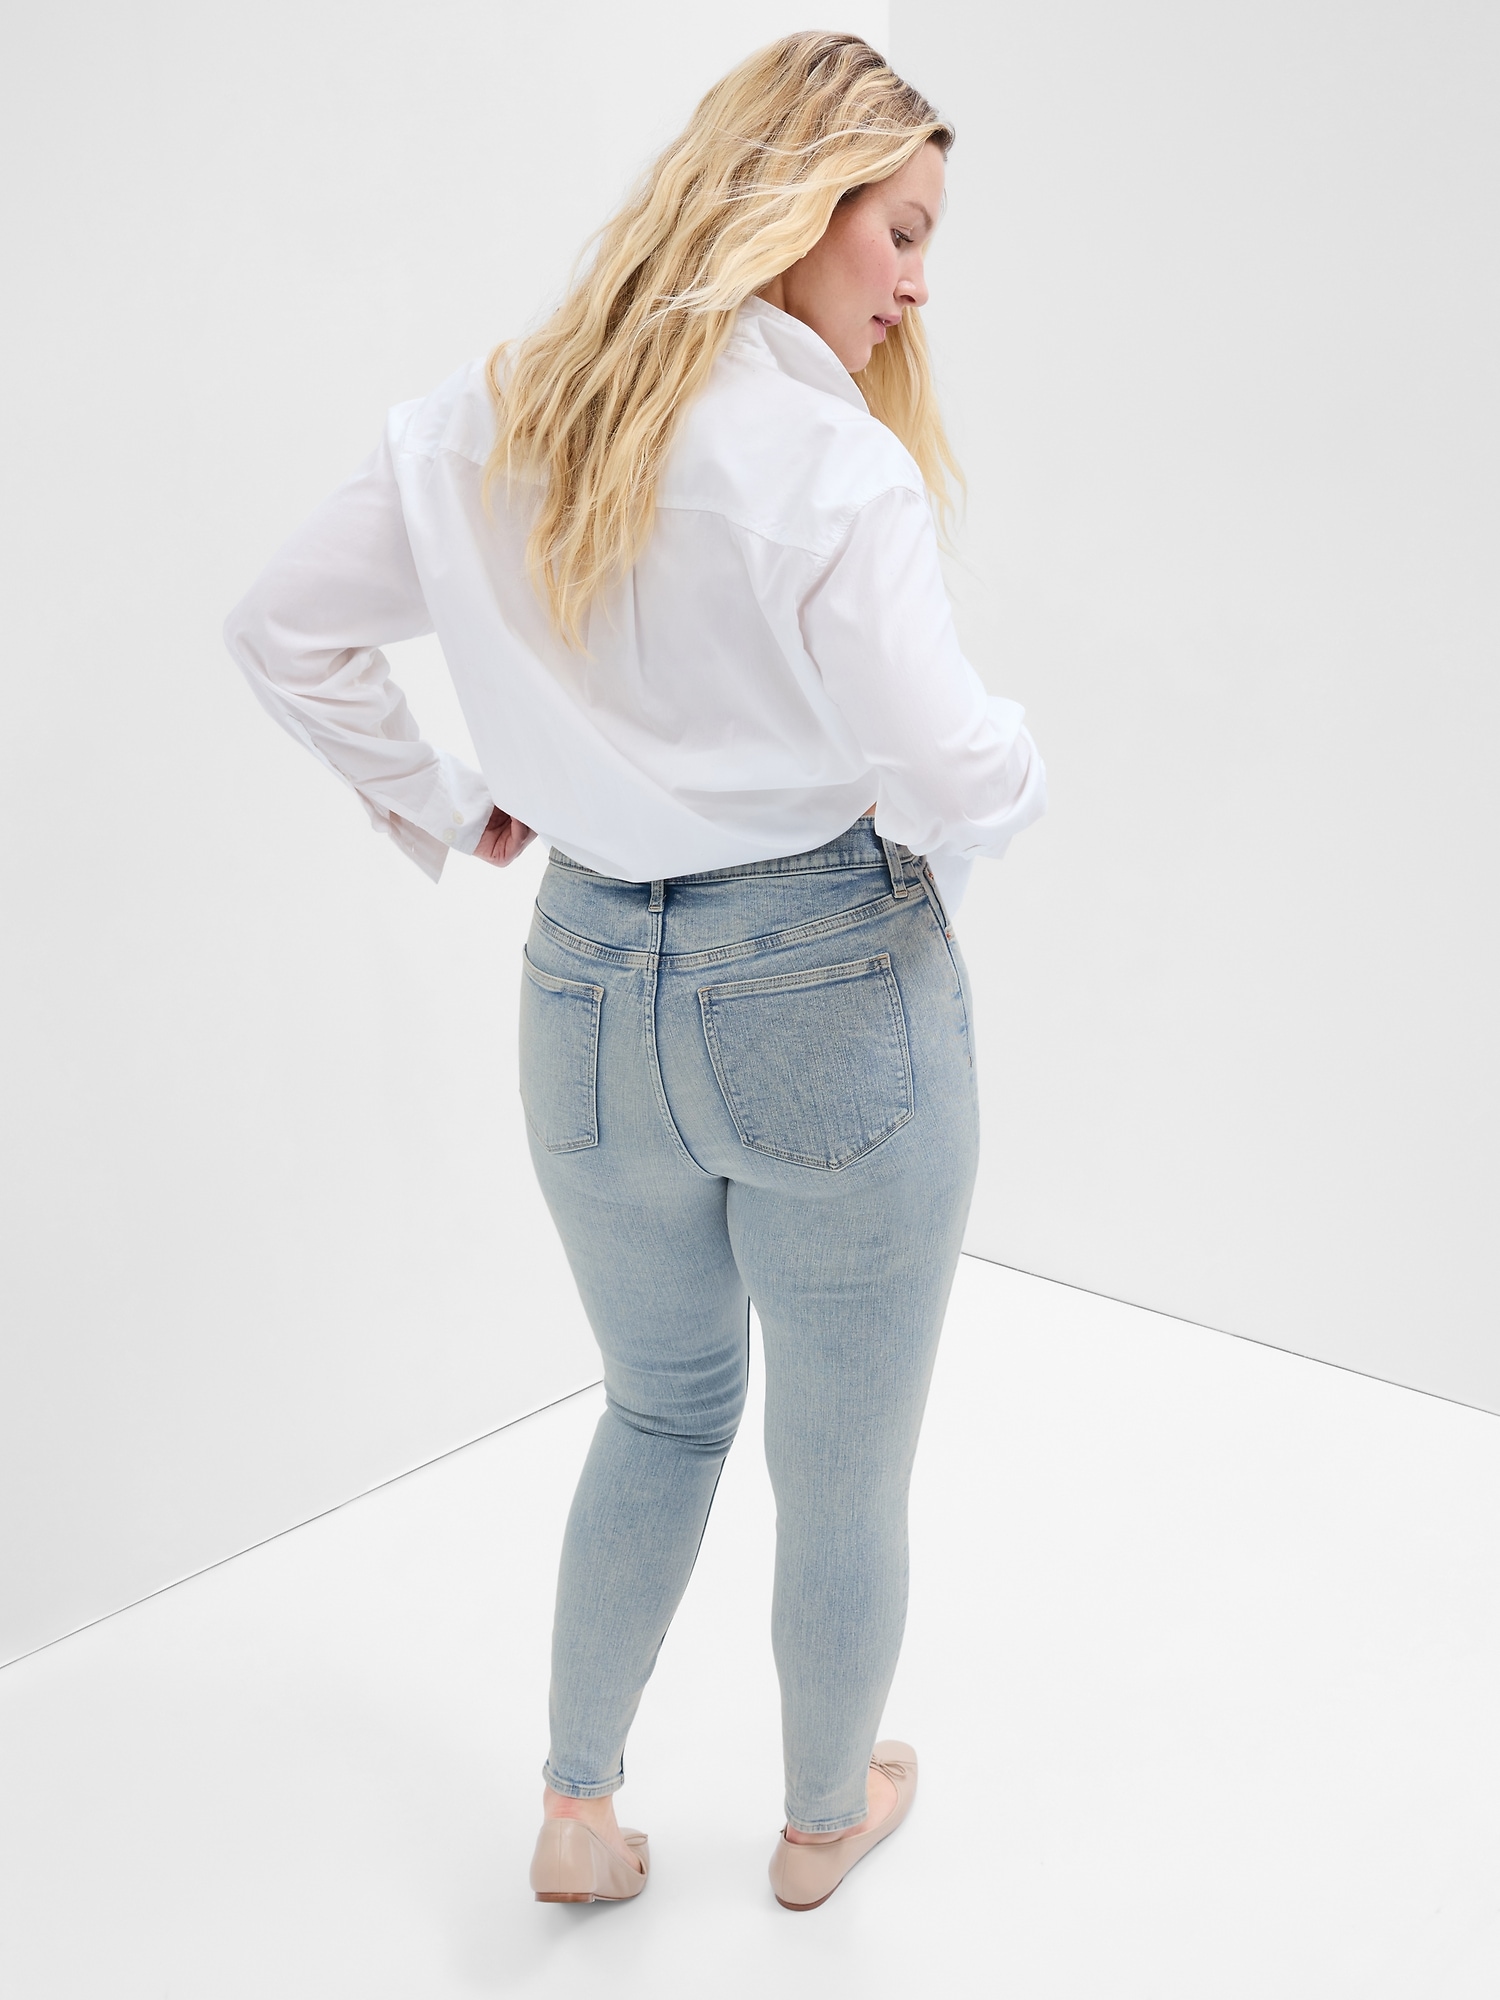 Gap Universal Legging Jeans Black Distressed Pockets Women's Size 12 NWT